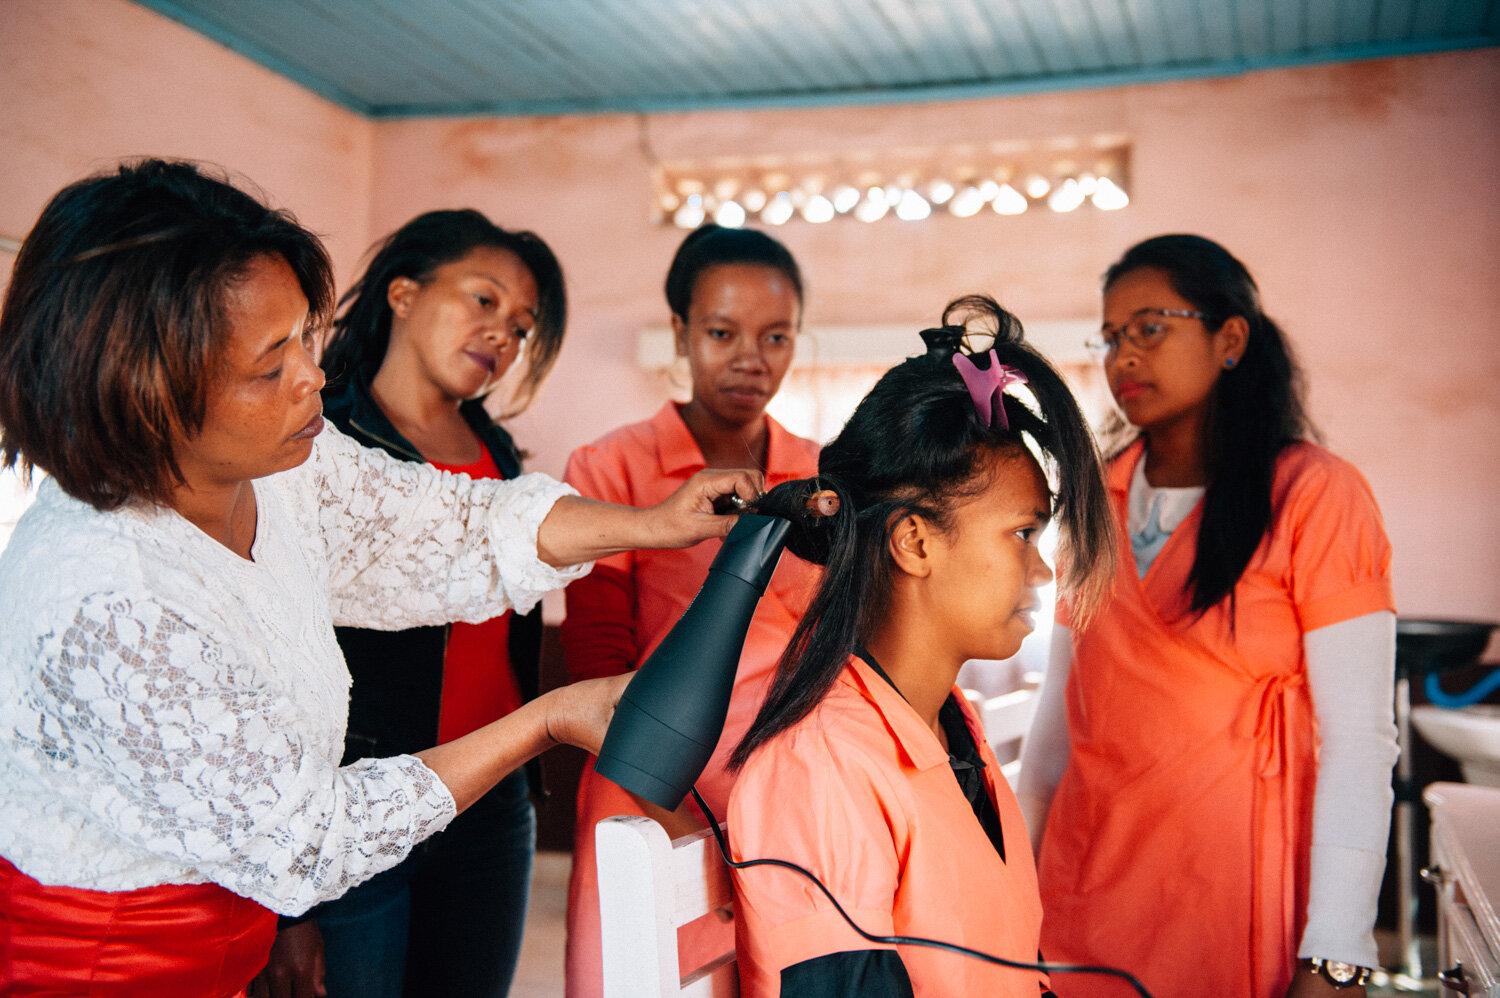  Enfants des rues. Formation professionnelle coiffure. Tananarive. Avril 2018 // Street children. Professional hairdressing training. Antananarivo. April 2018. 